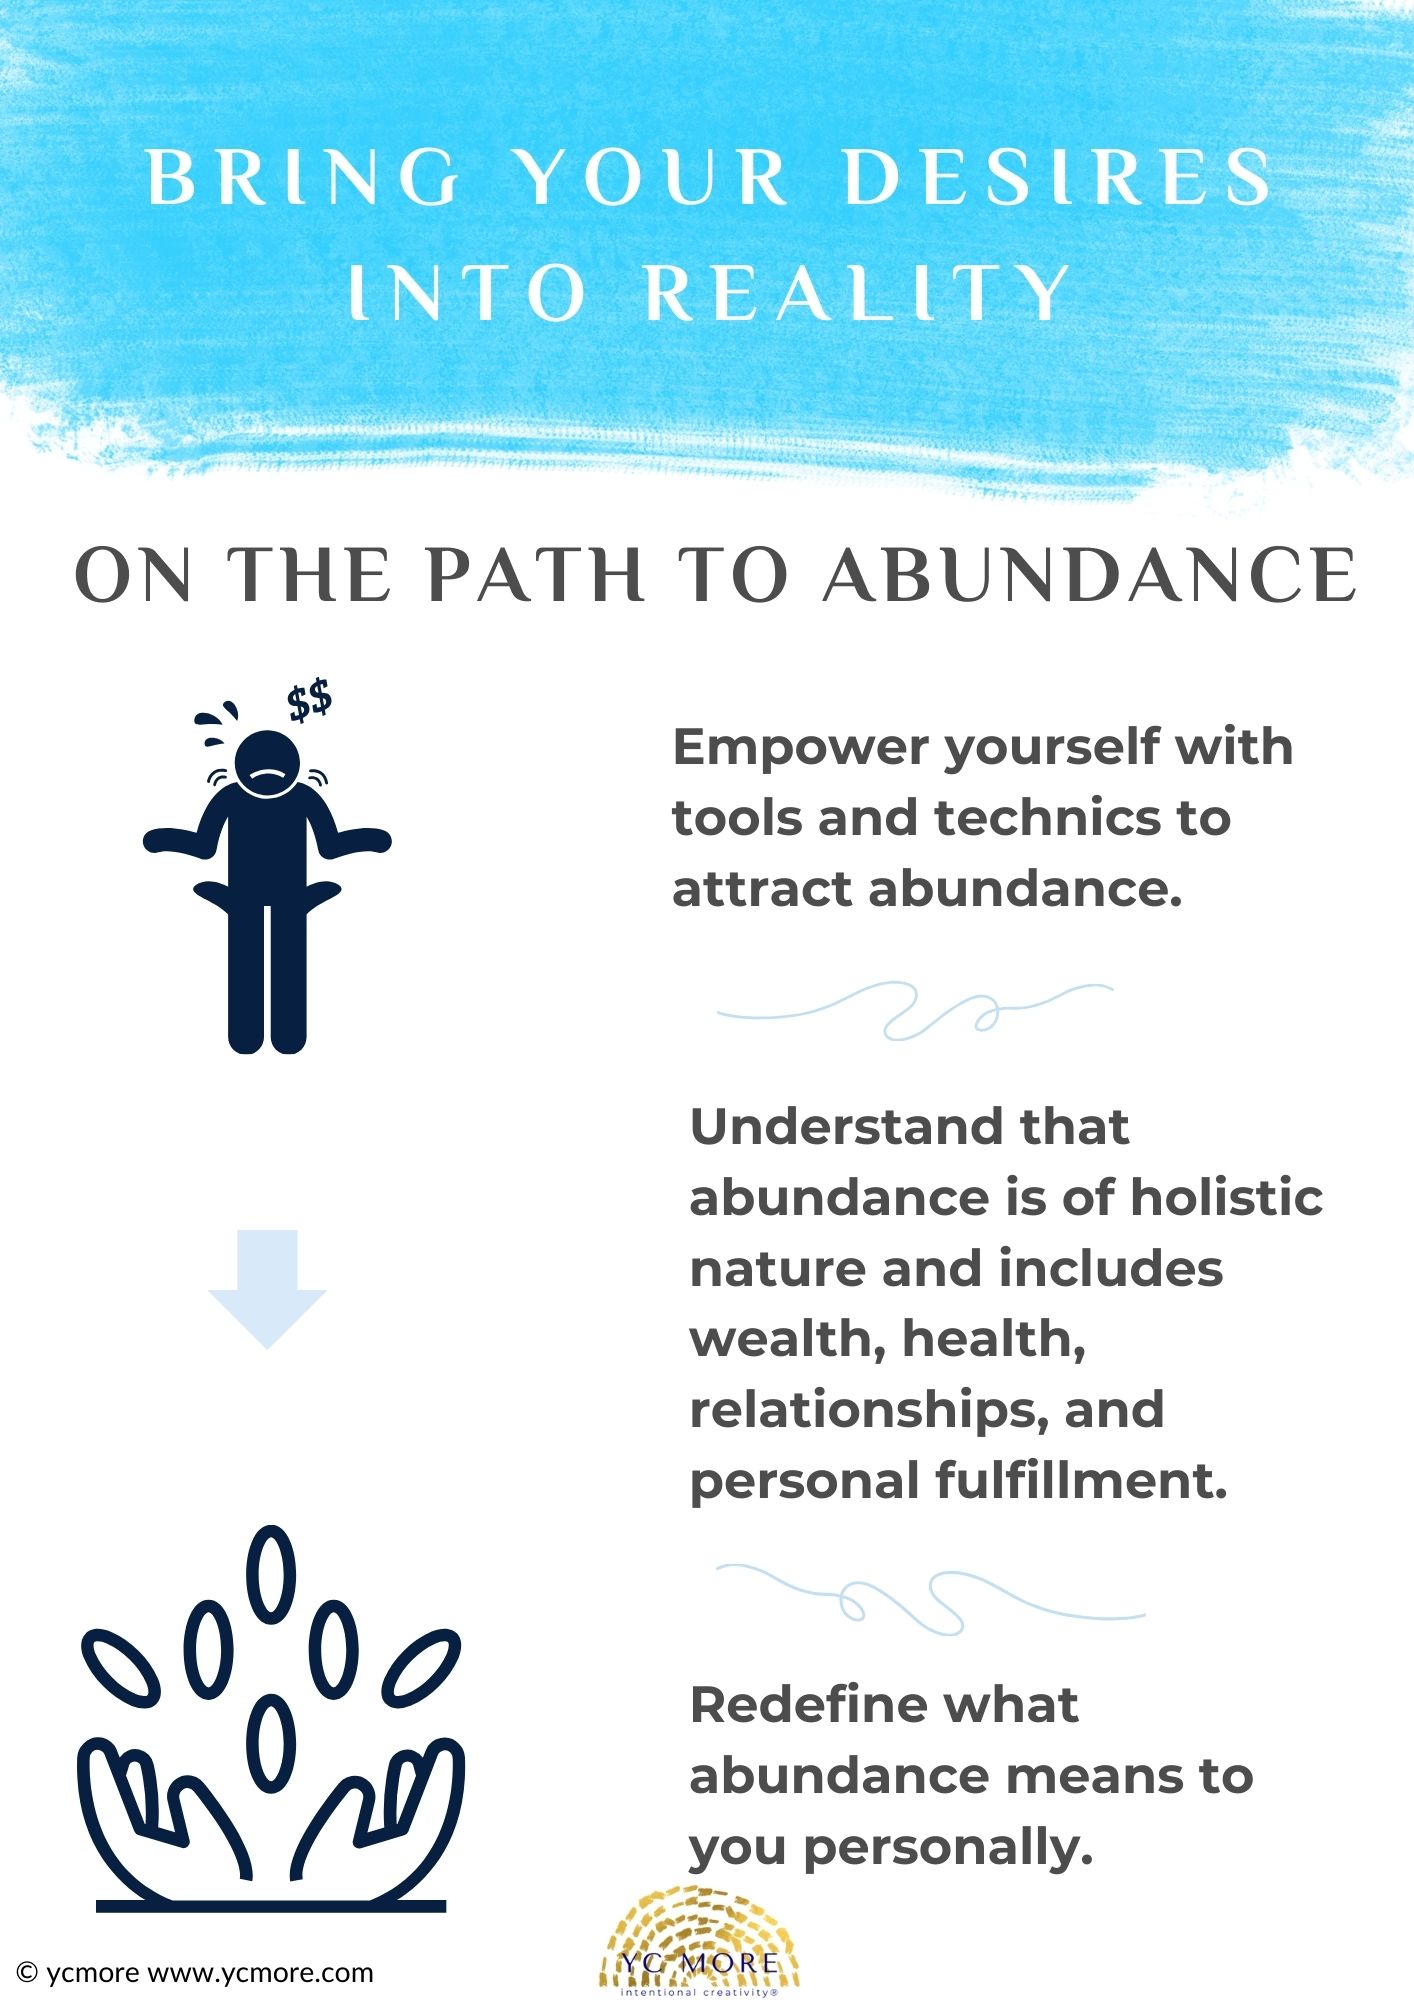 On the path of abundance